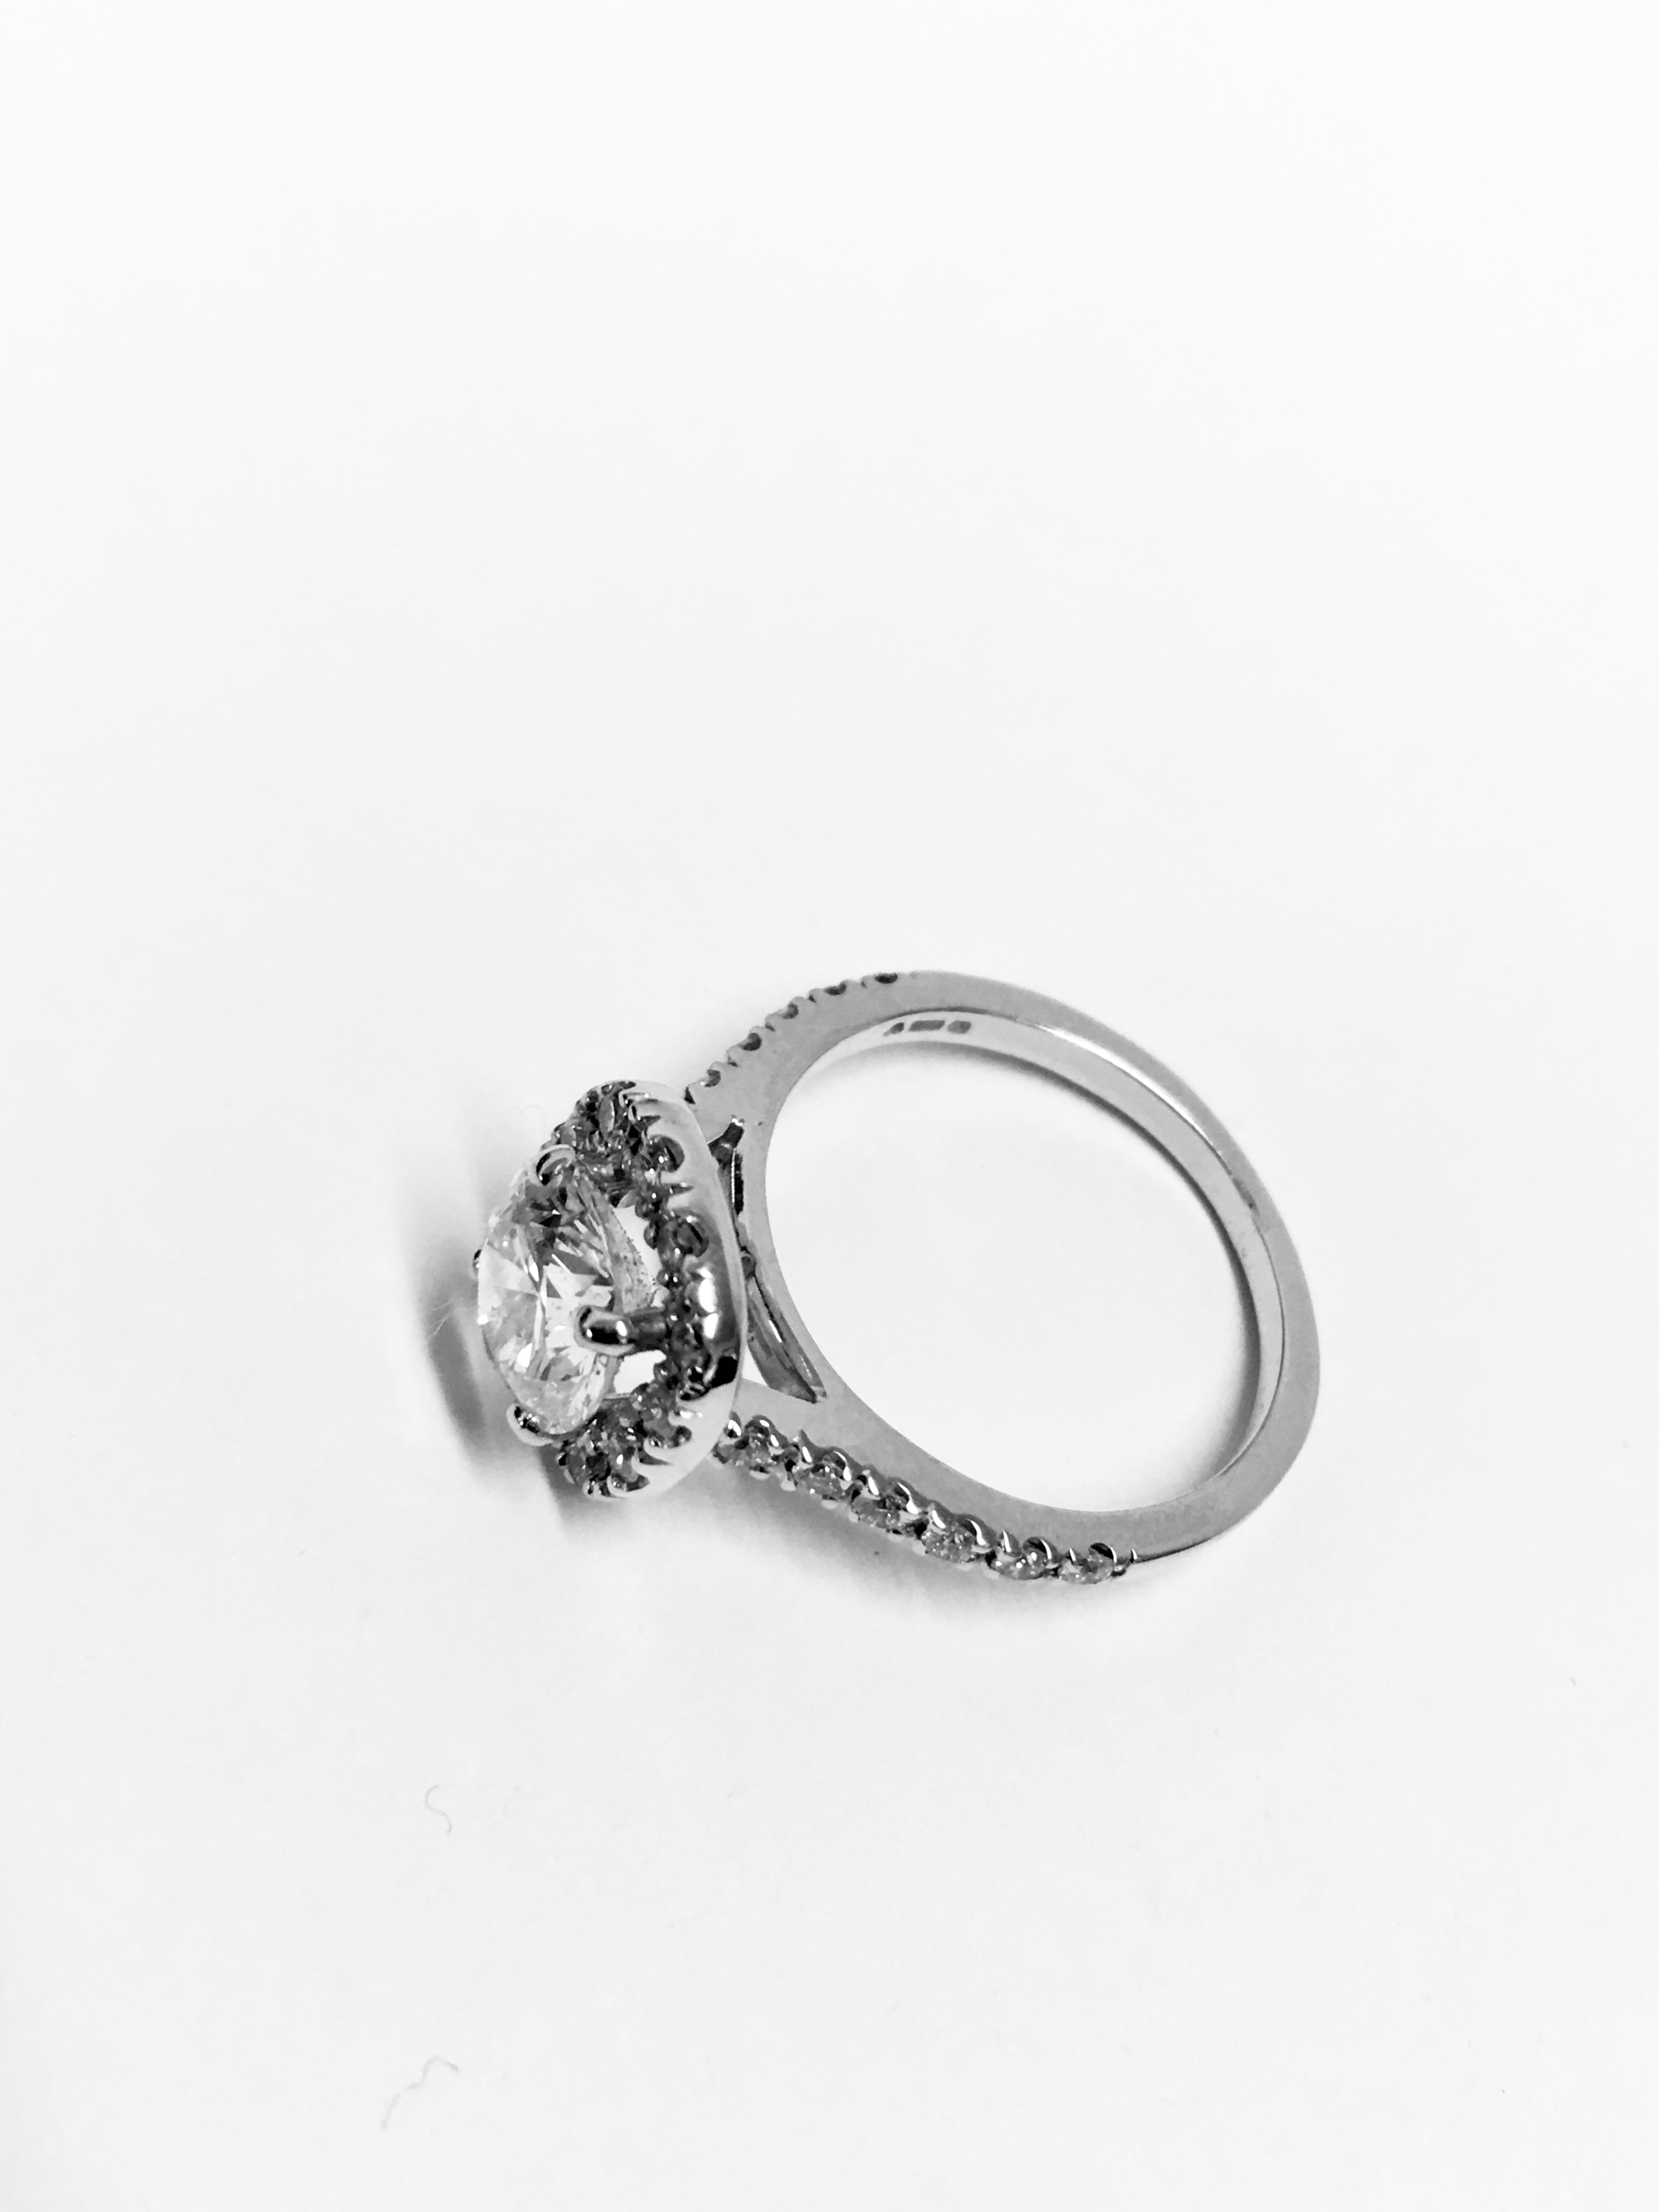 1.25ct diamond halo ring set in 18ct white gold - Image 19 of 24